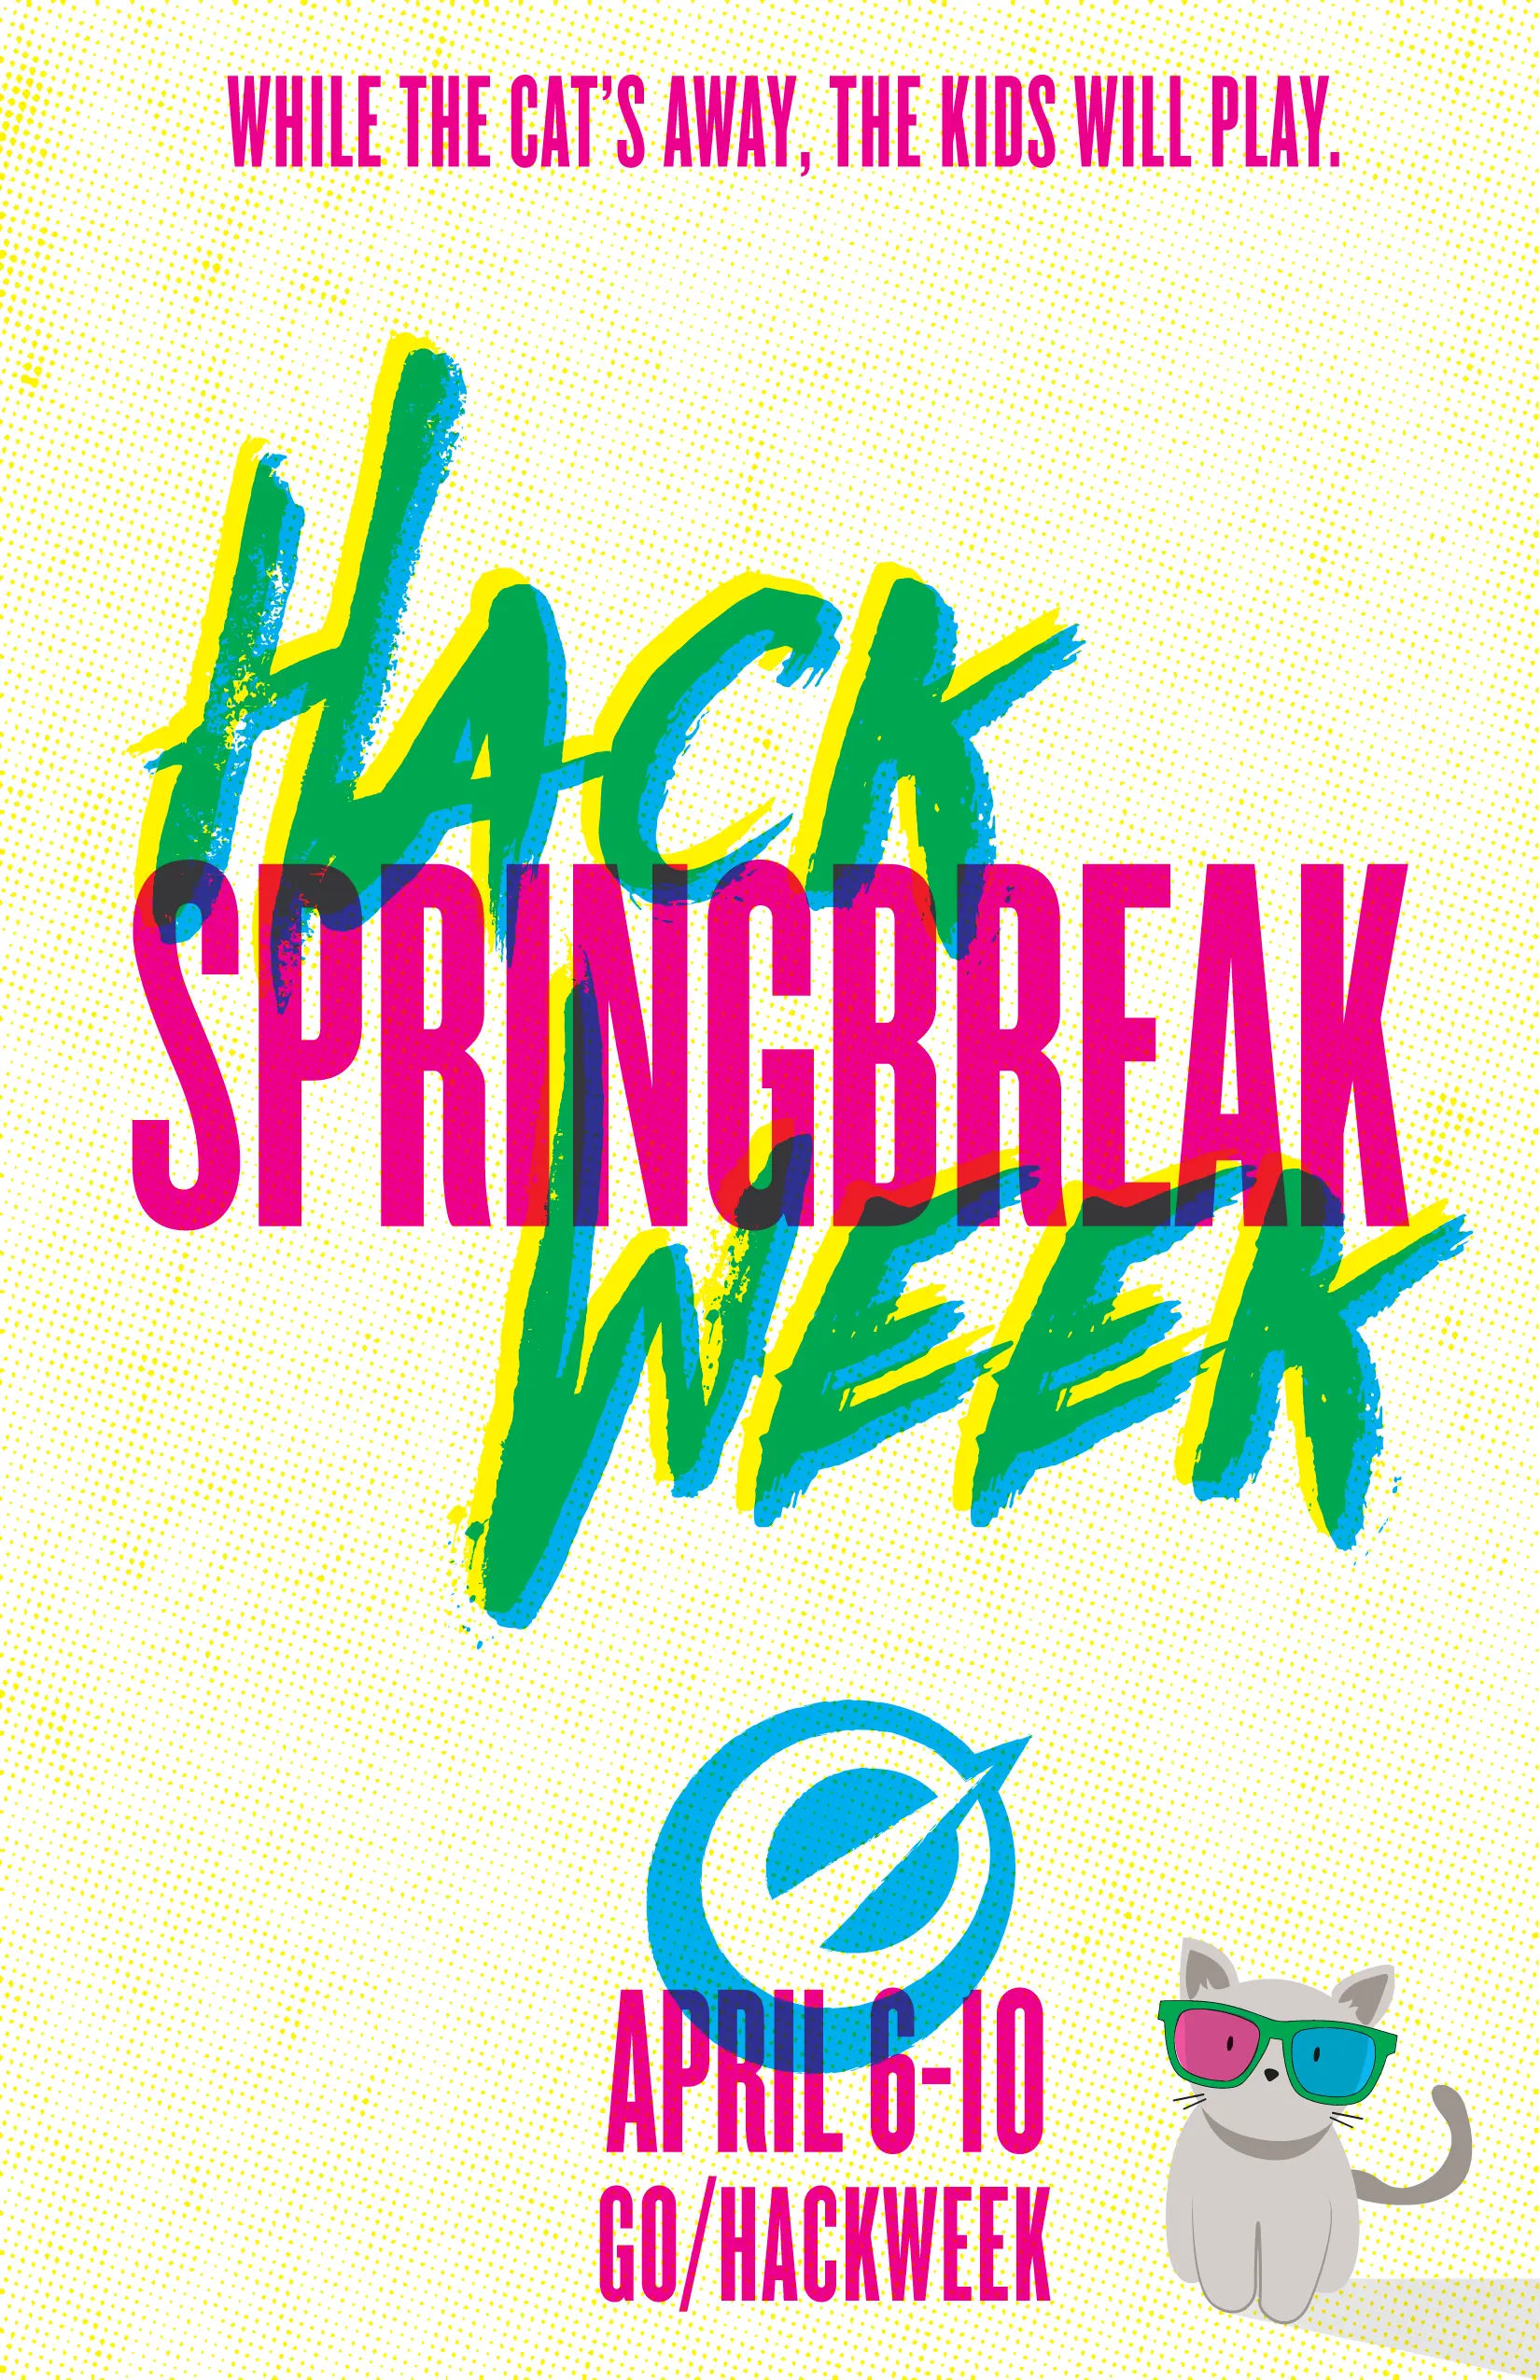 optimizely hackweek poster